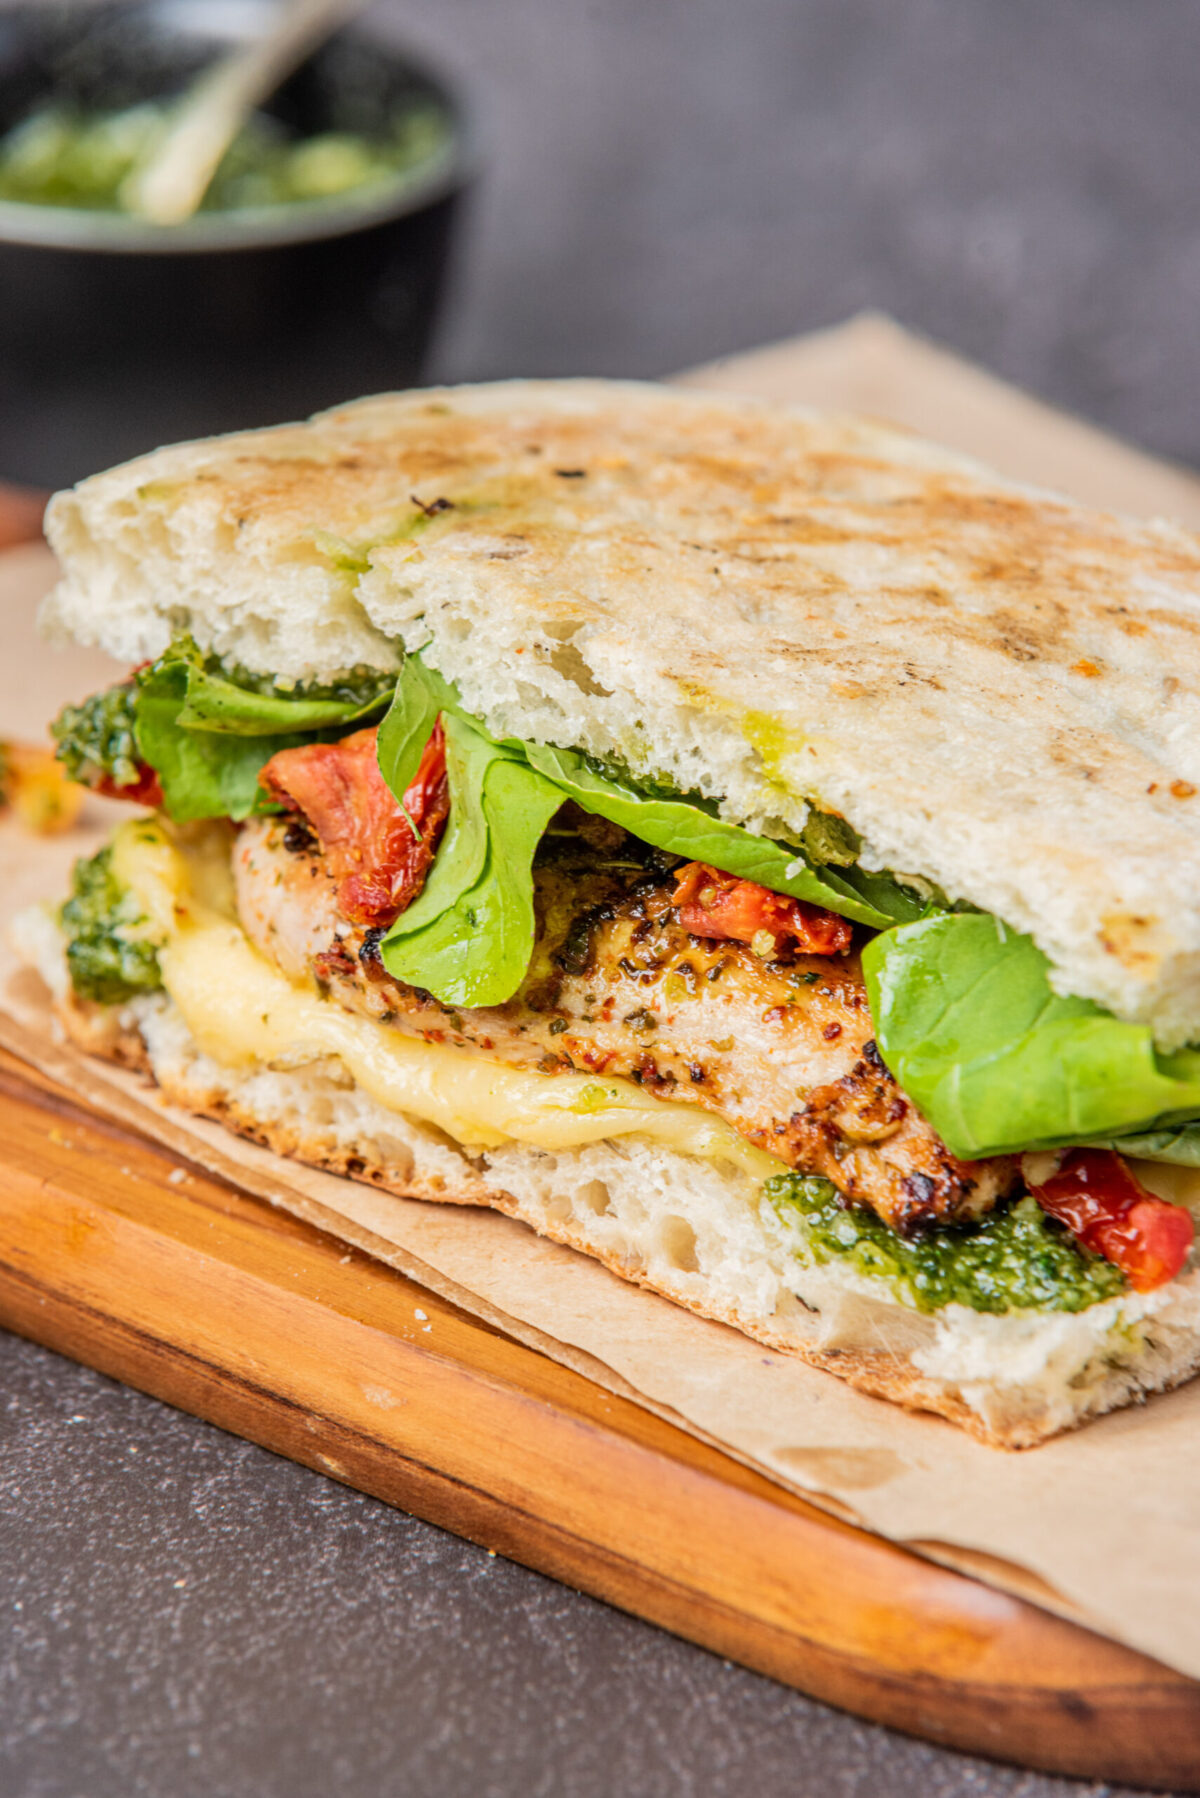 pesto chicken sandwich assembled with arugula on a wood board, close up photo